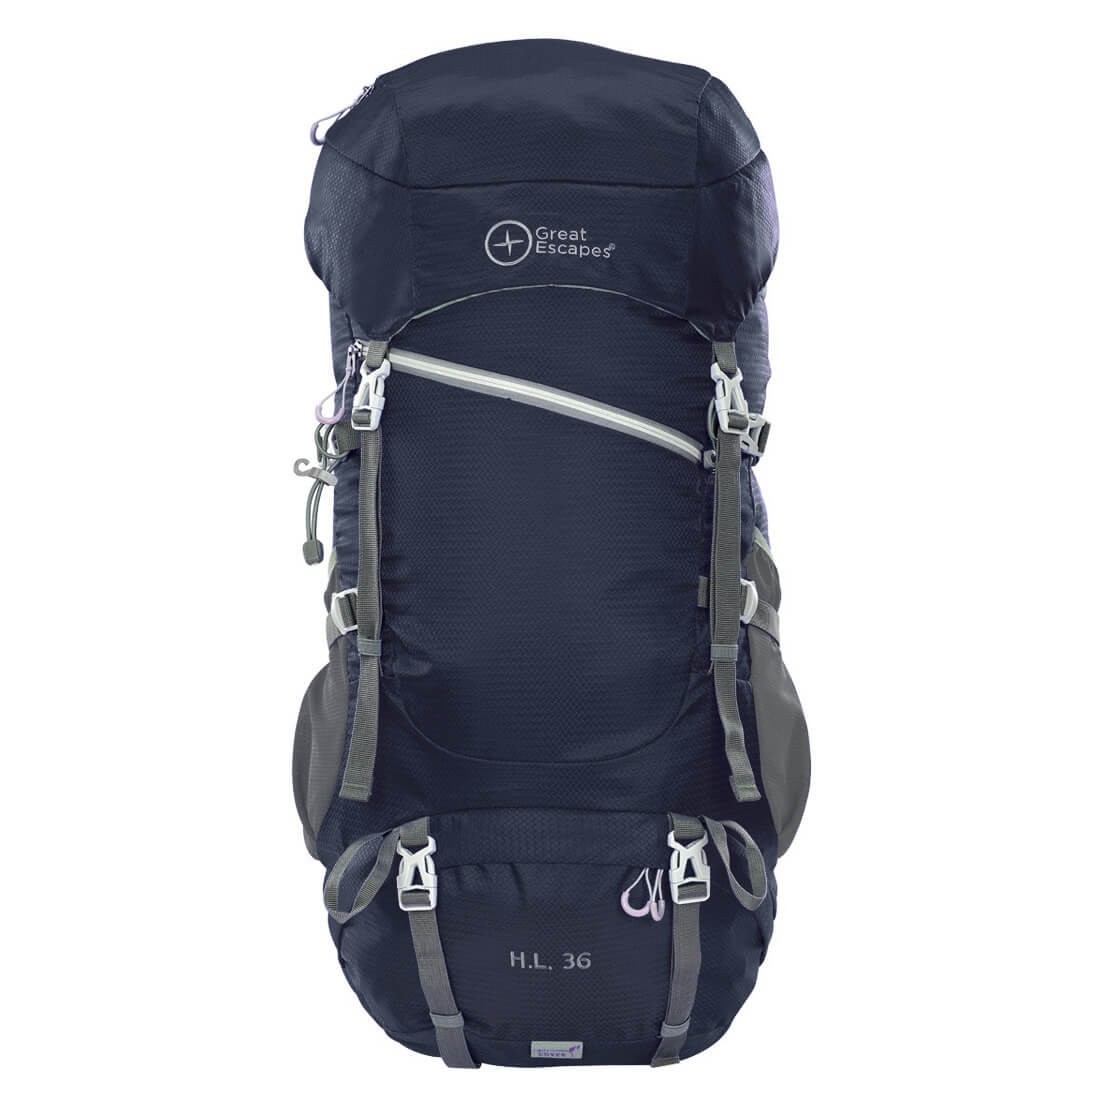 H.L. 36 - Trekking backpack 36 liters